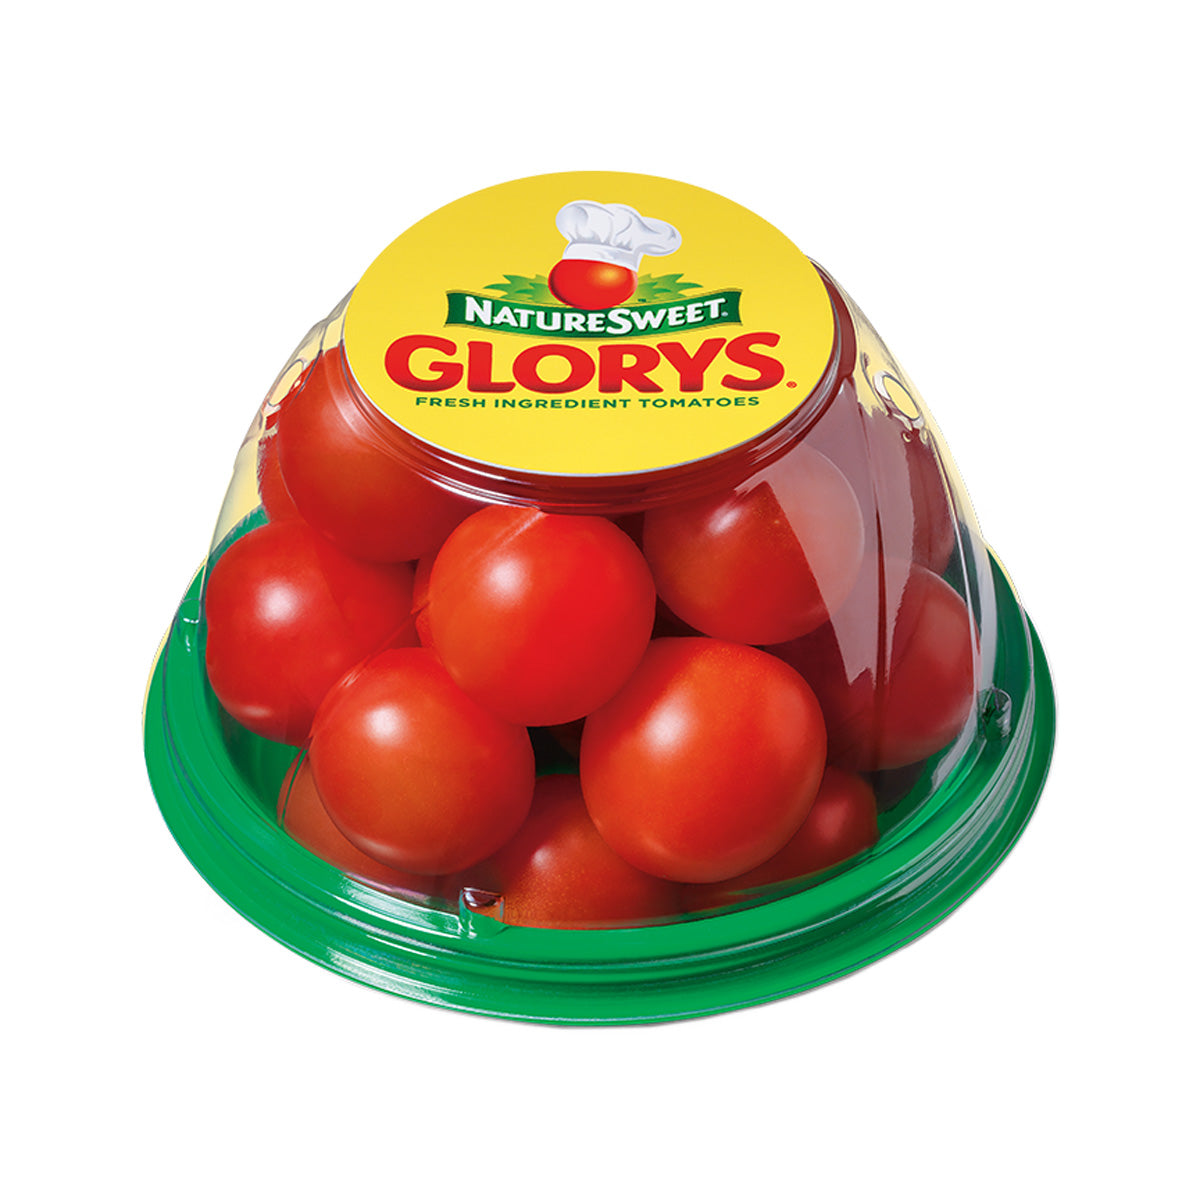 Naturesweet Glorys Cherry Tomatoes 10 OZ